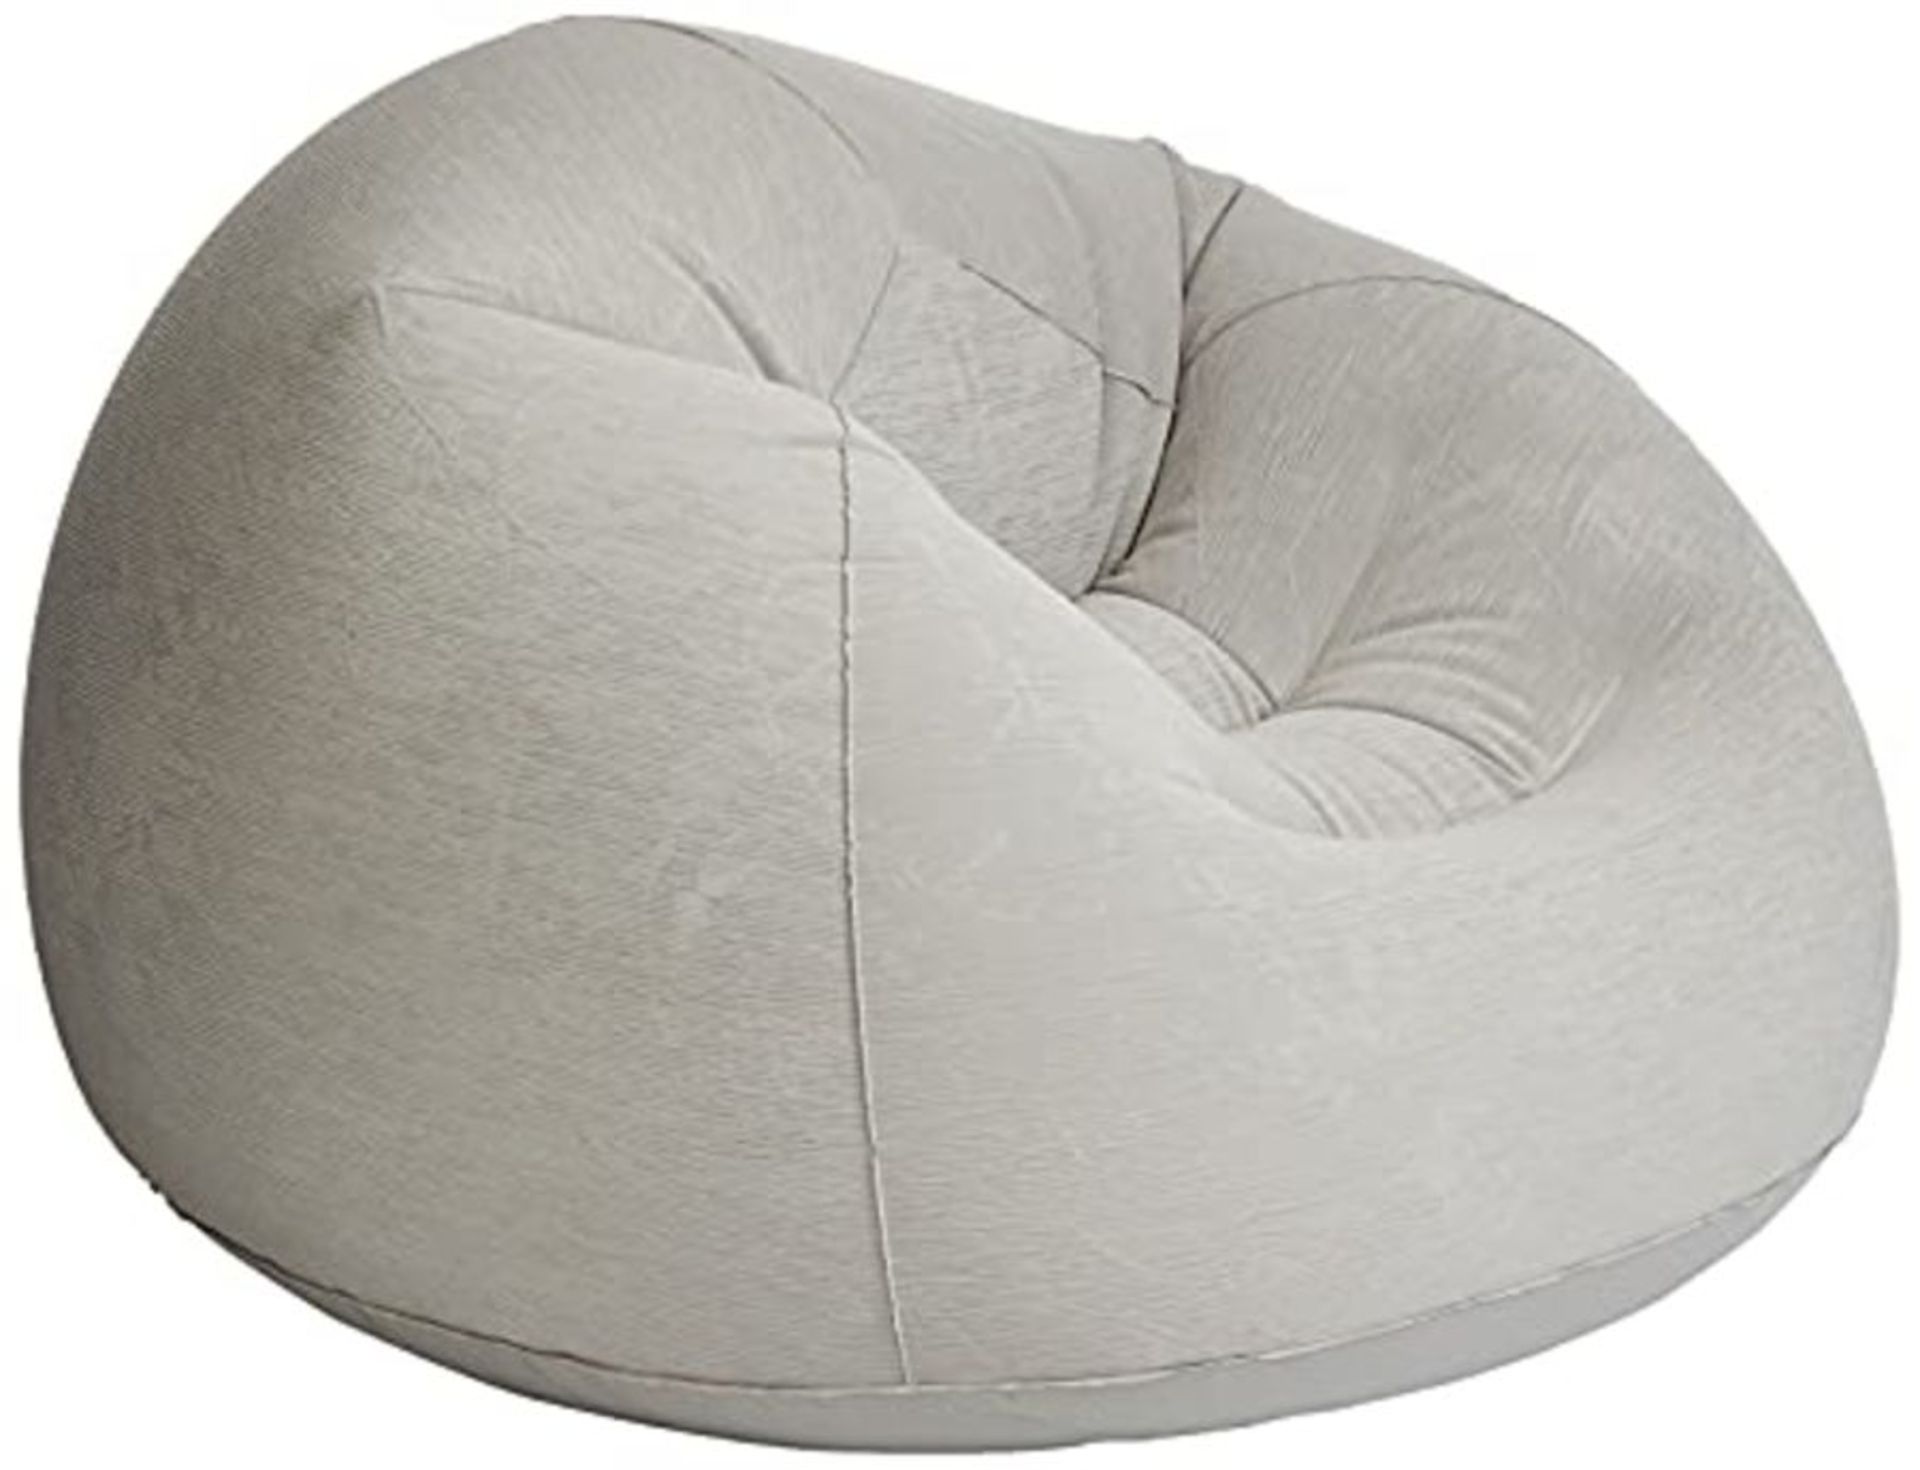 Intex Beanless Bag Inflatable Chair, Grey